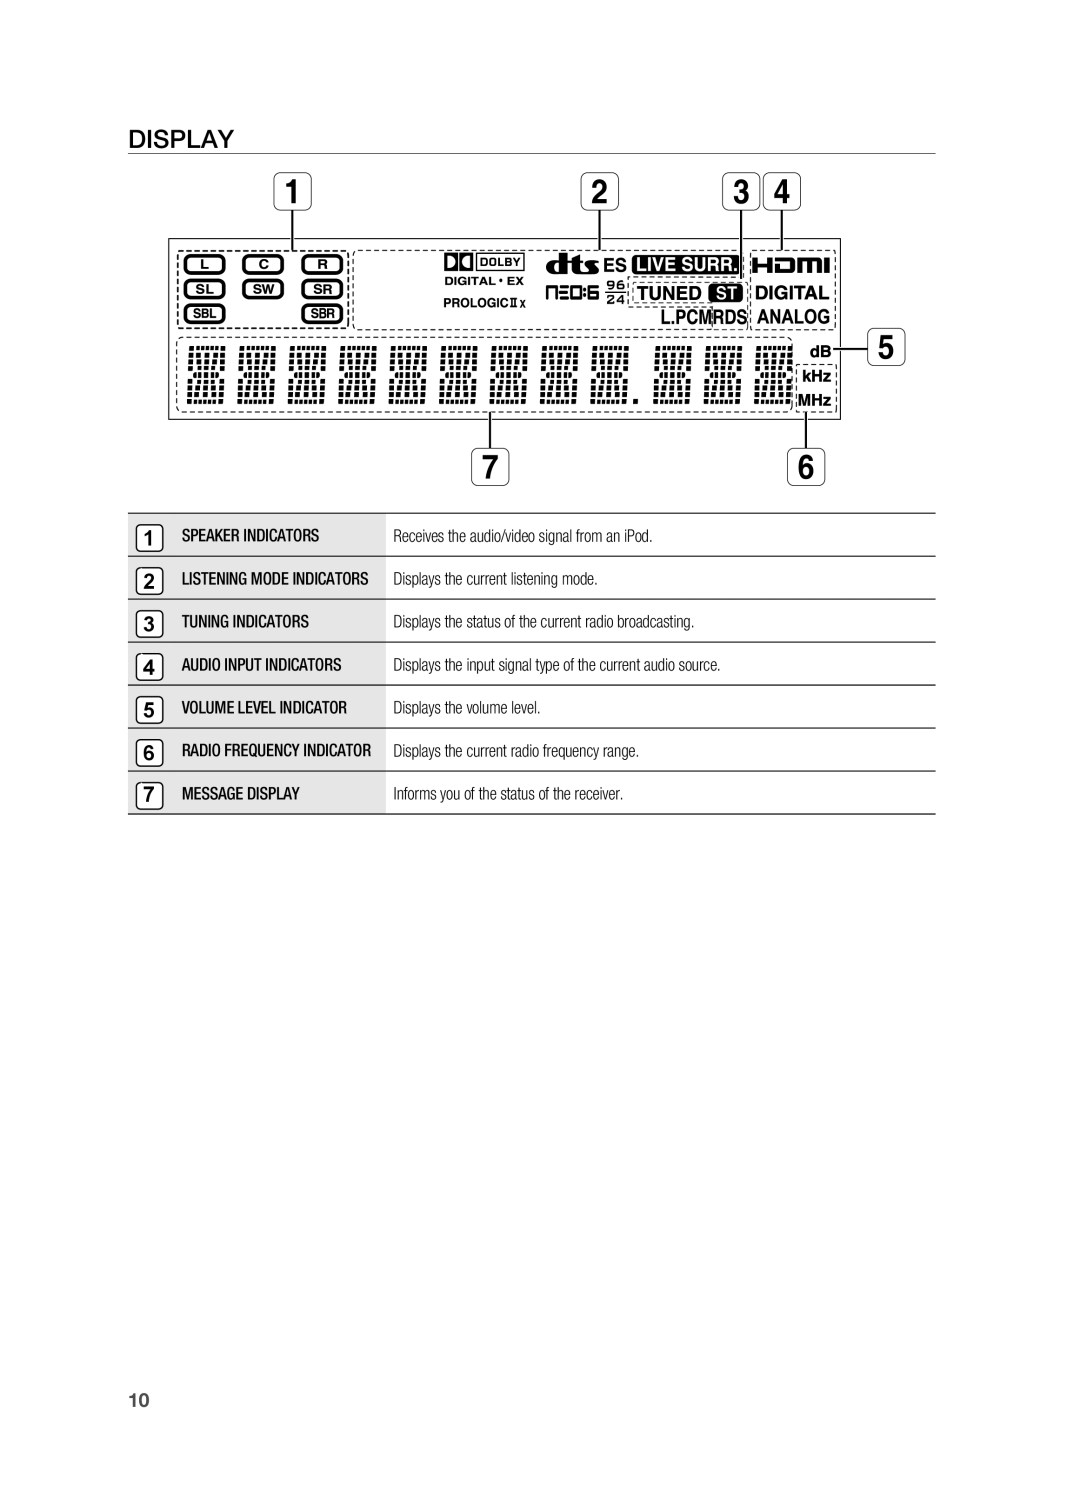 Samsung HT-AS730ST user manual Display 